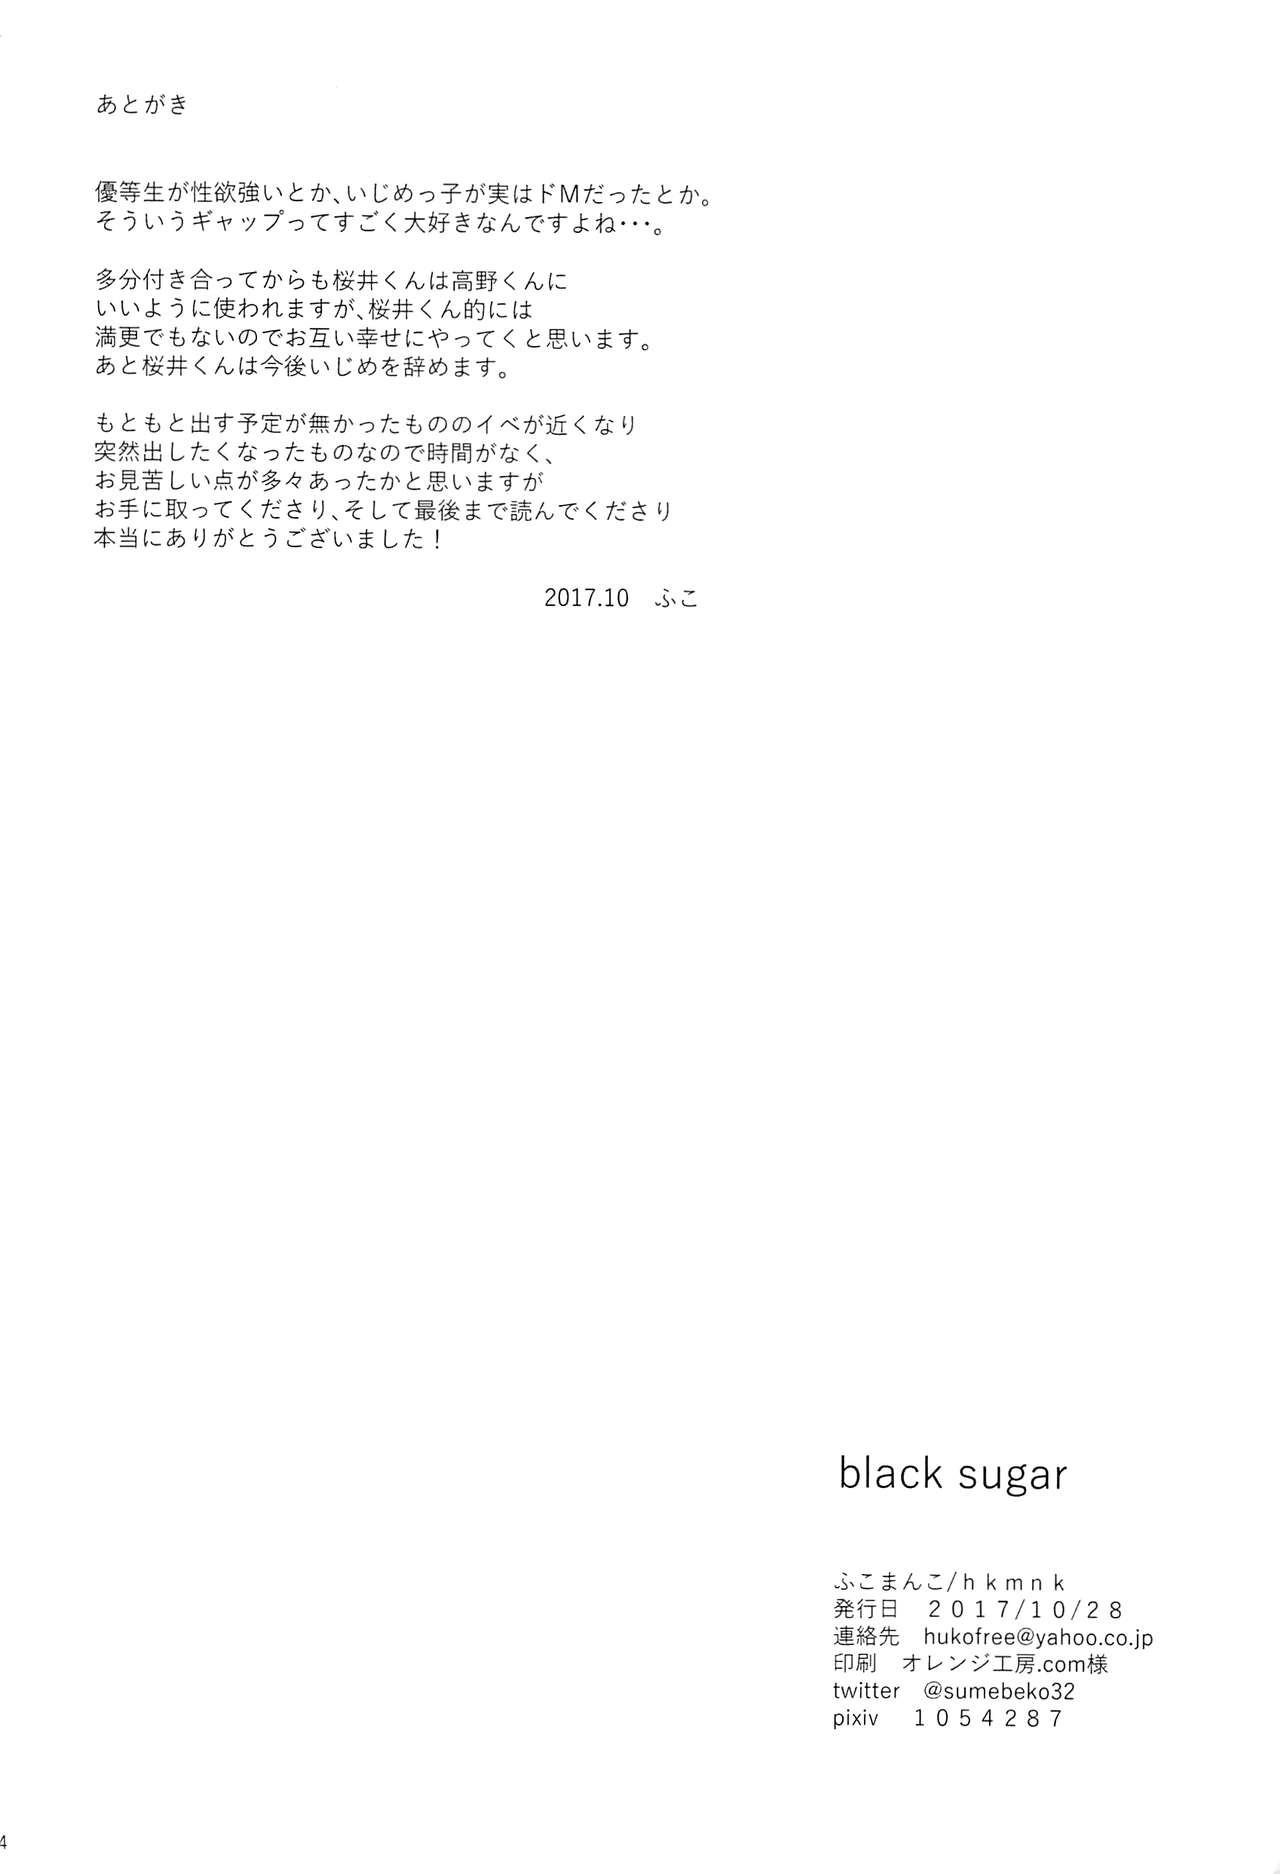 black sugar 12